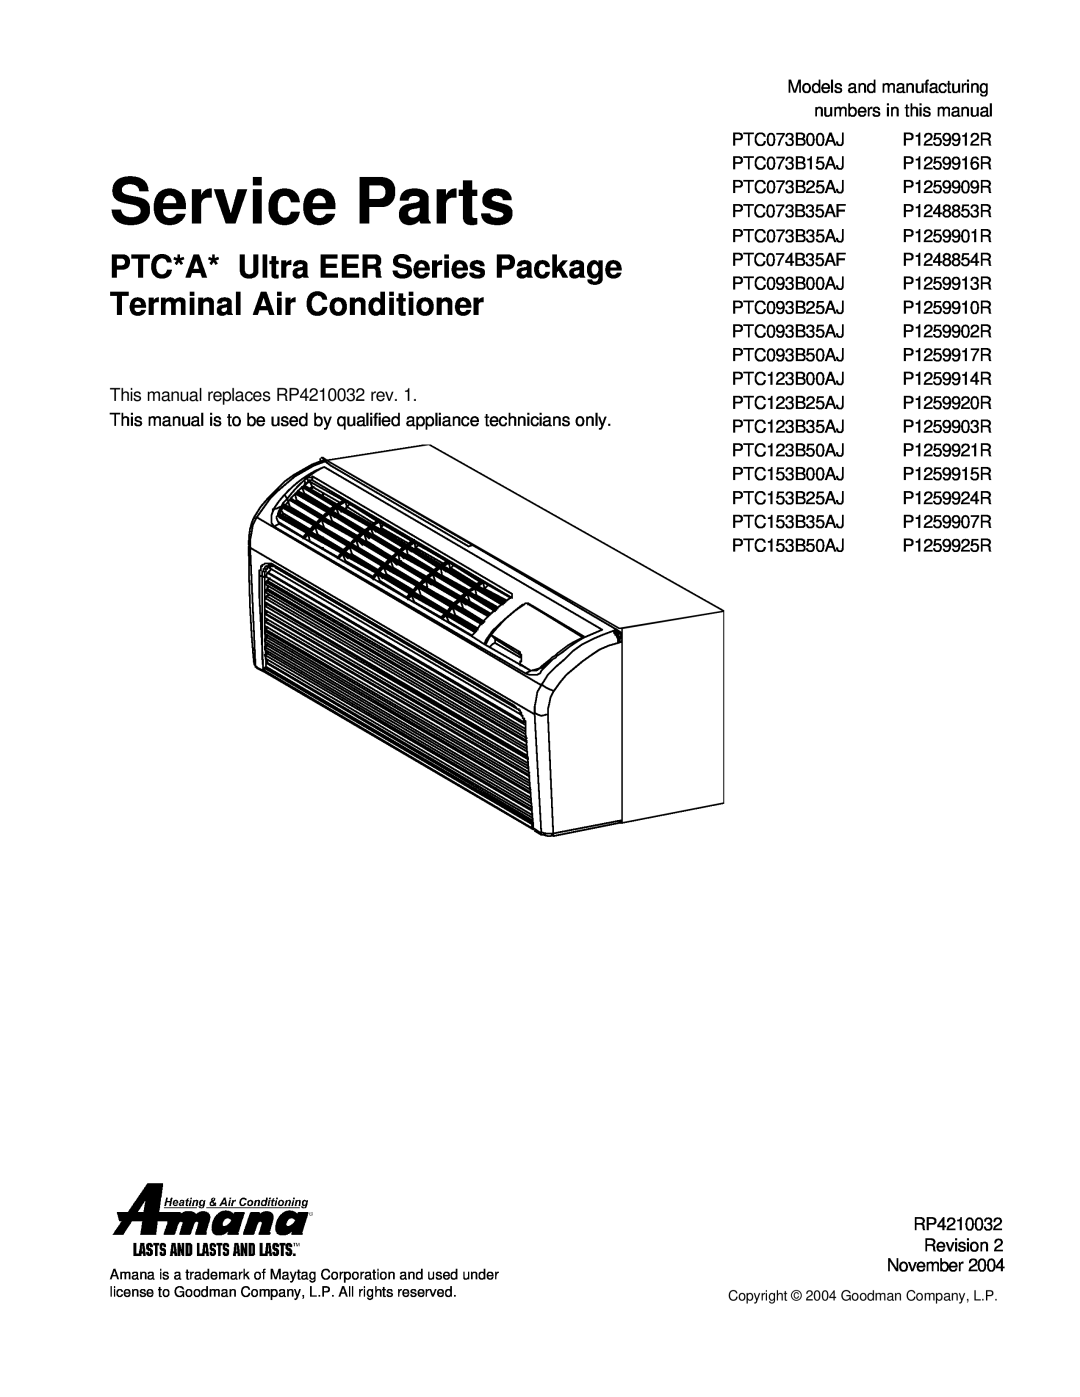 Amana RP4210032 manual Service Parts 